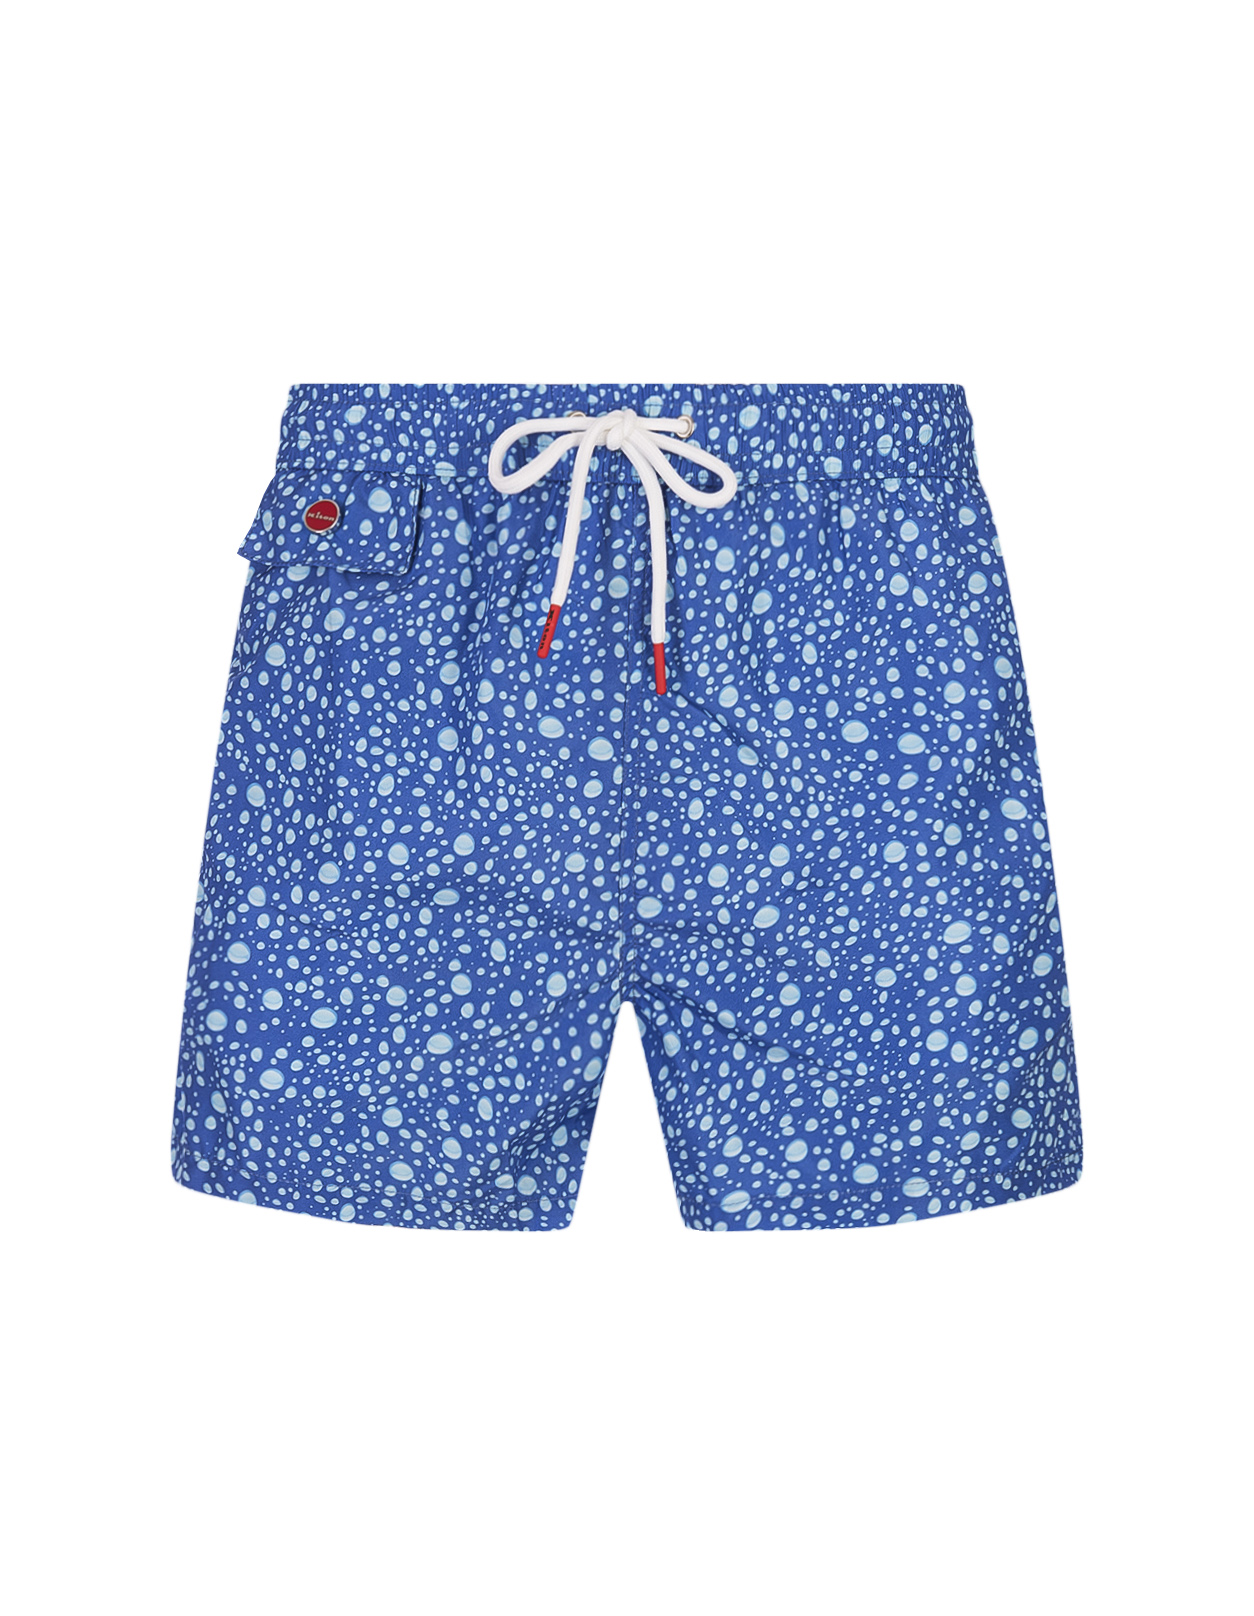 Shorts Da Mare Blu Con Pattern Gocce D'Acqua KITON | UCOM2CK0709D23